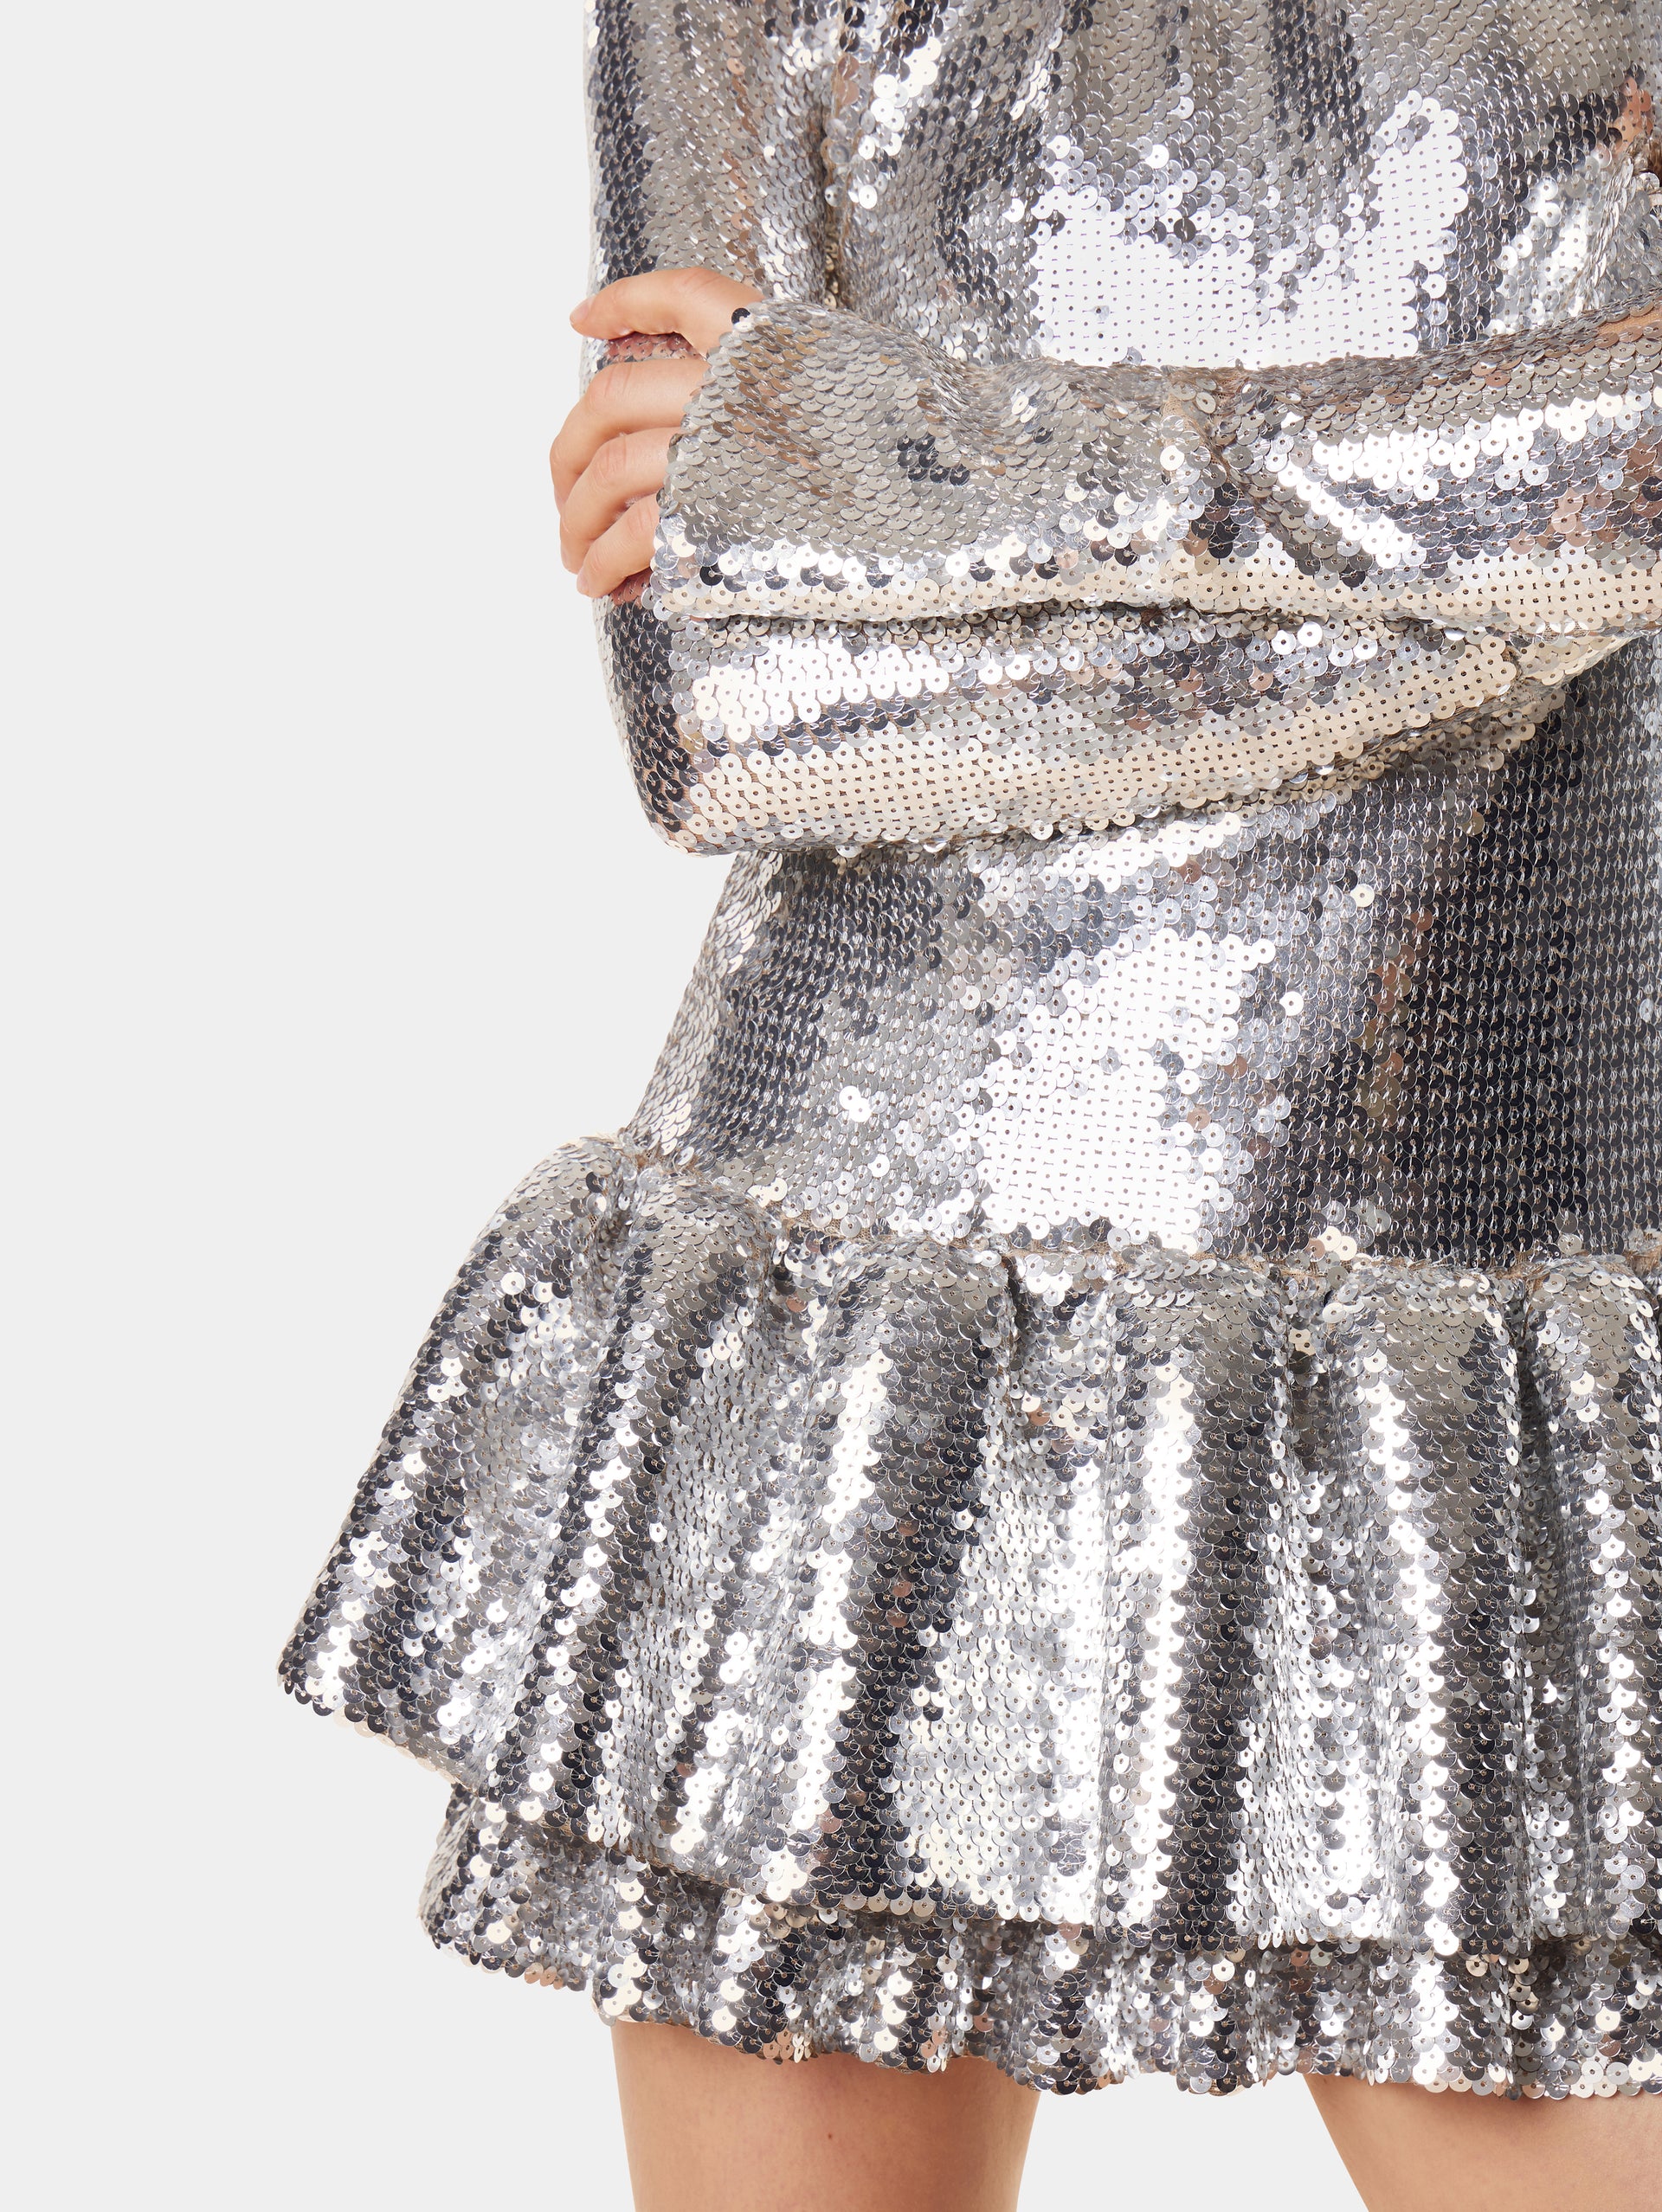 Silver Sequin Dress